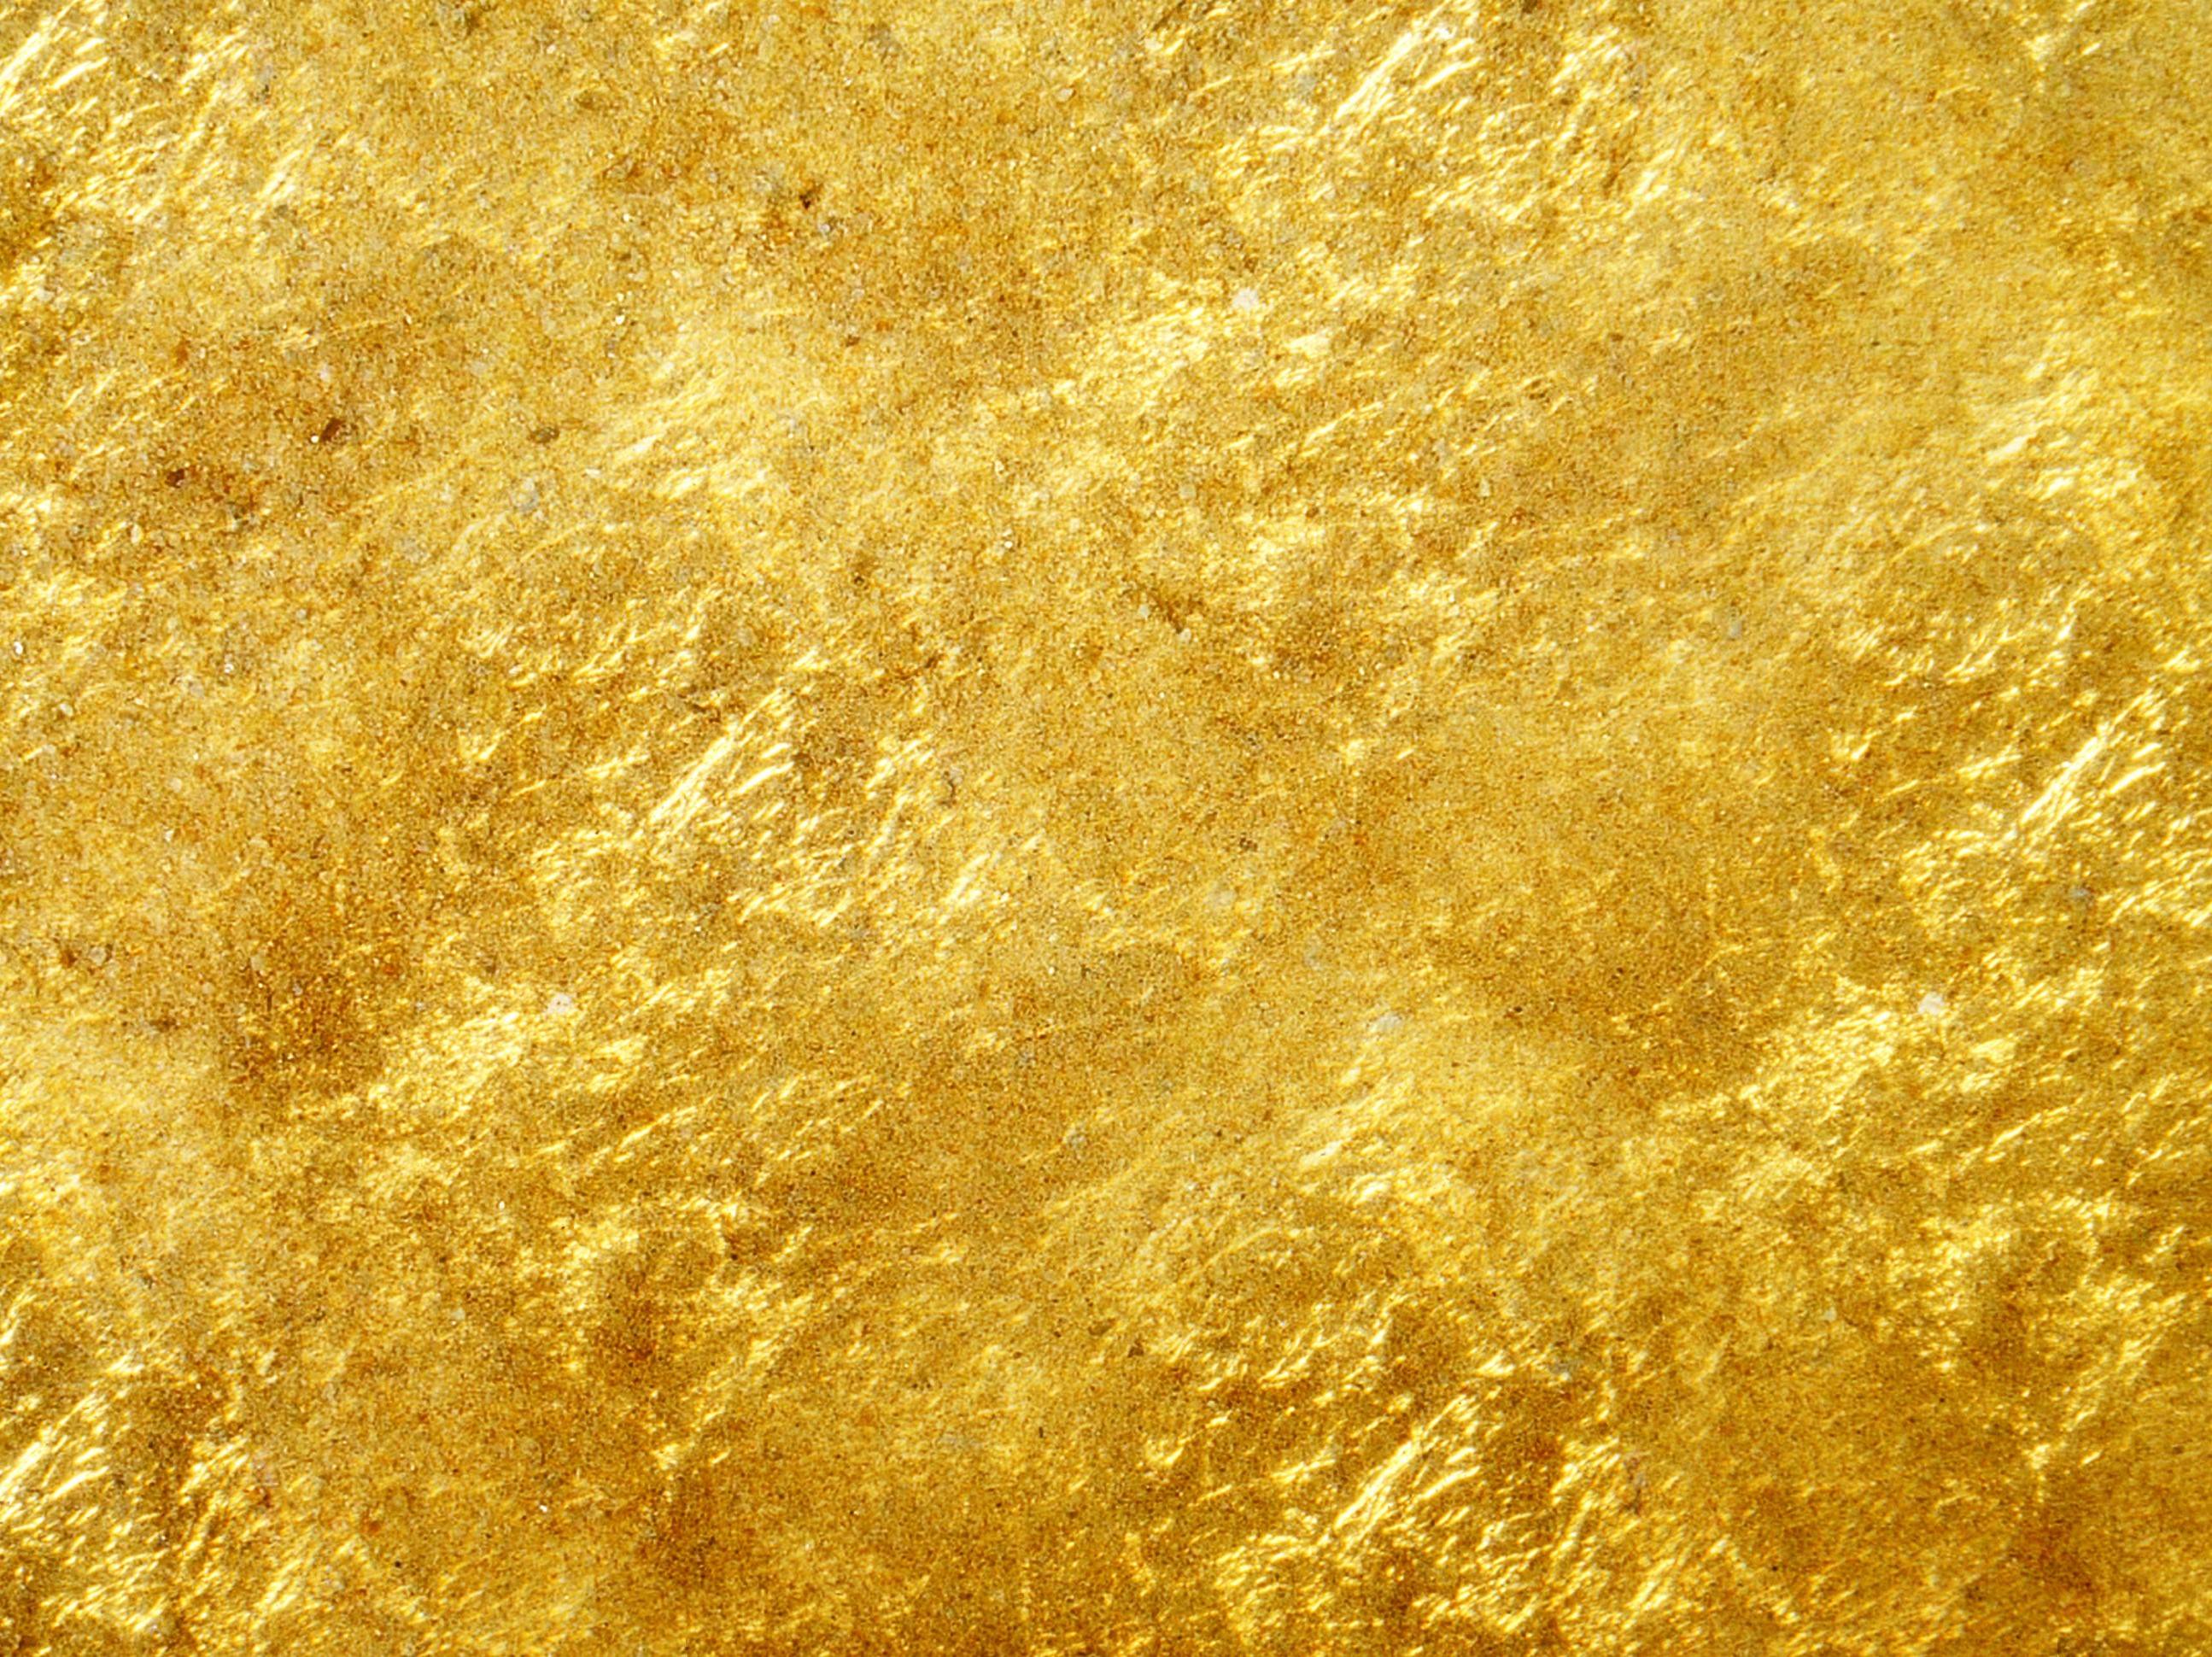 Gold Leaf Background (The Wiz) by ImagineeringFun on DeviantArt